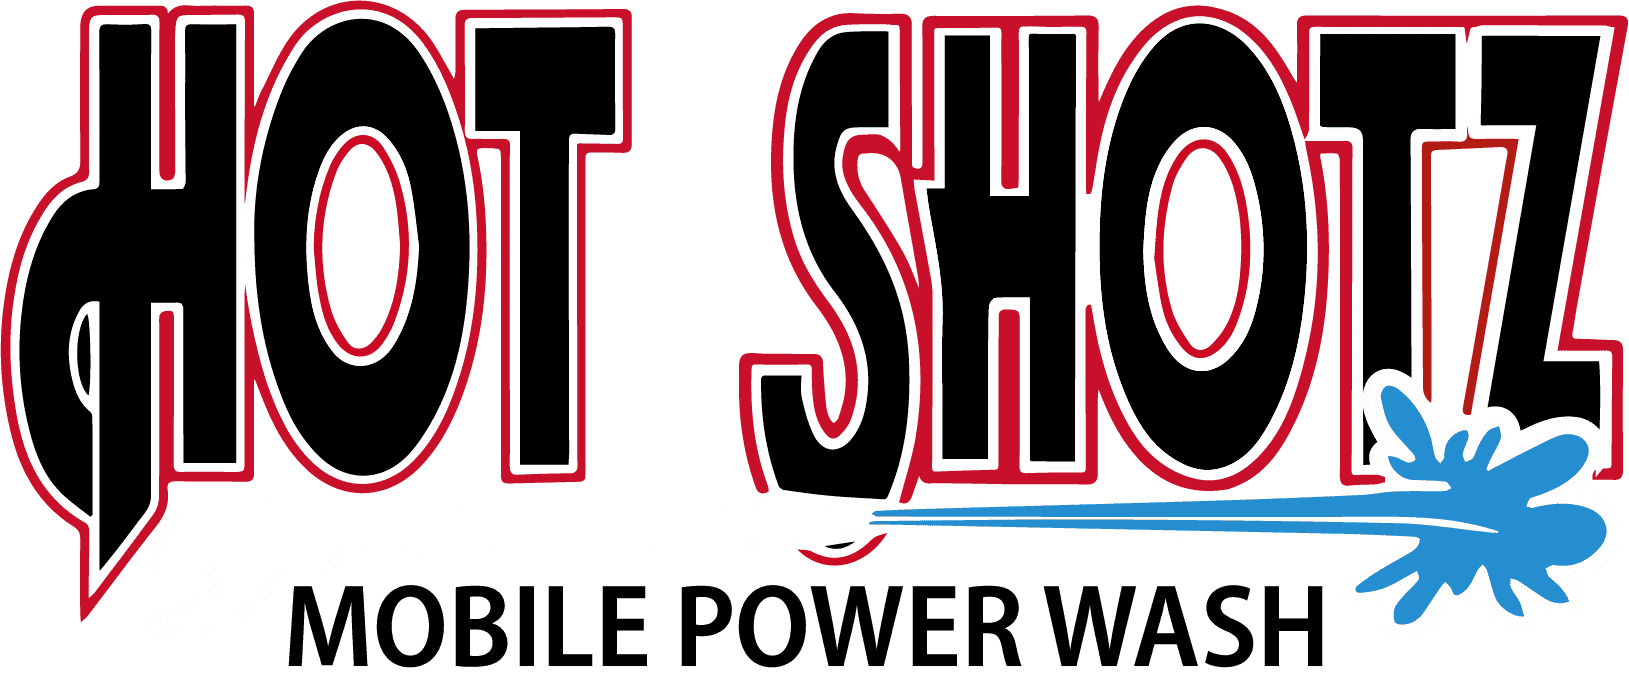 Hot Shotz Mobile Power Wash